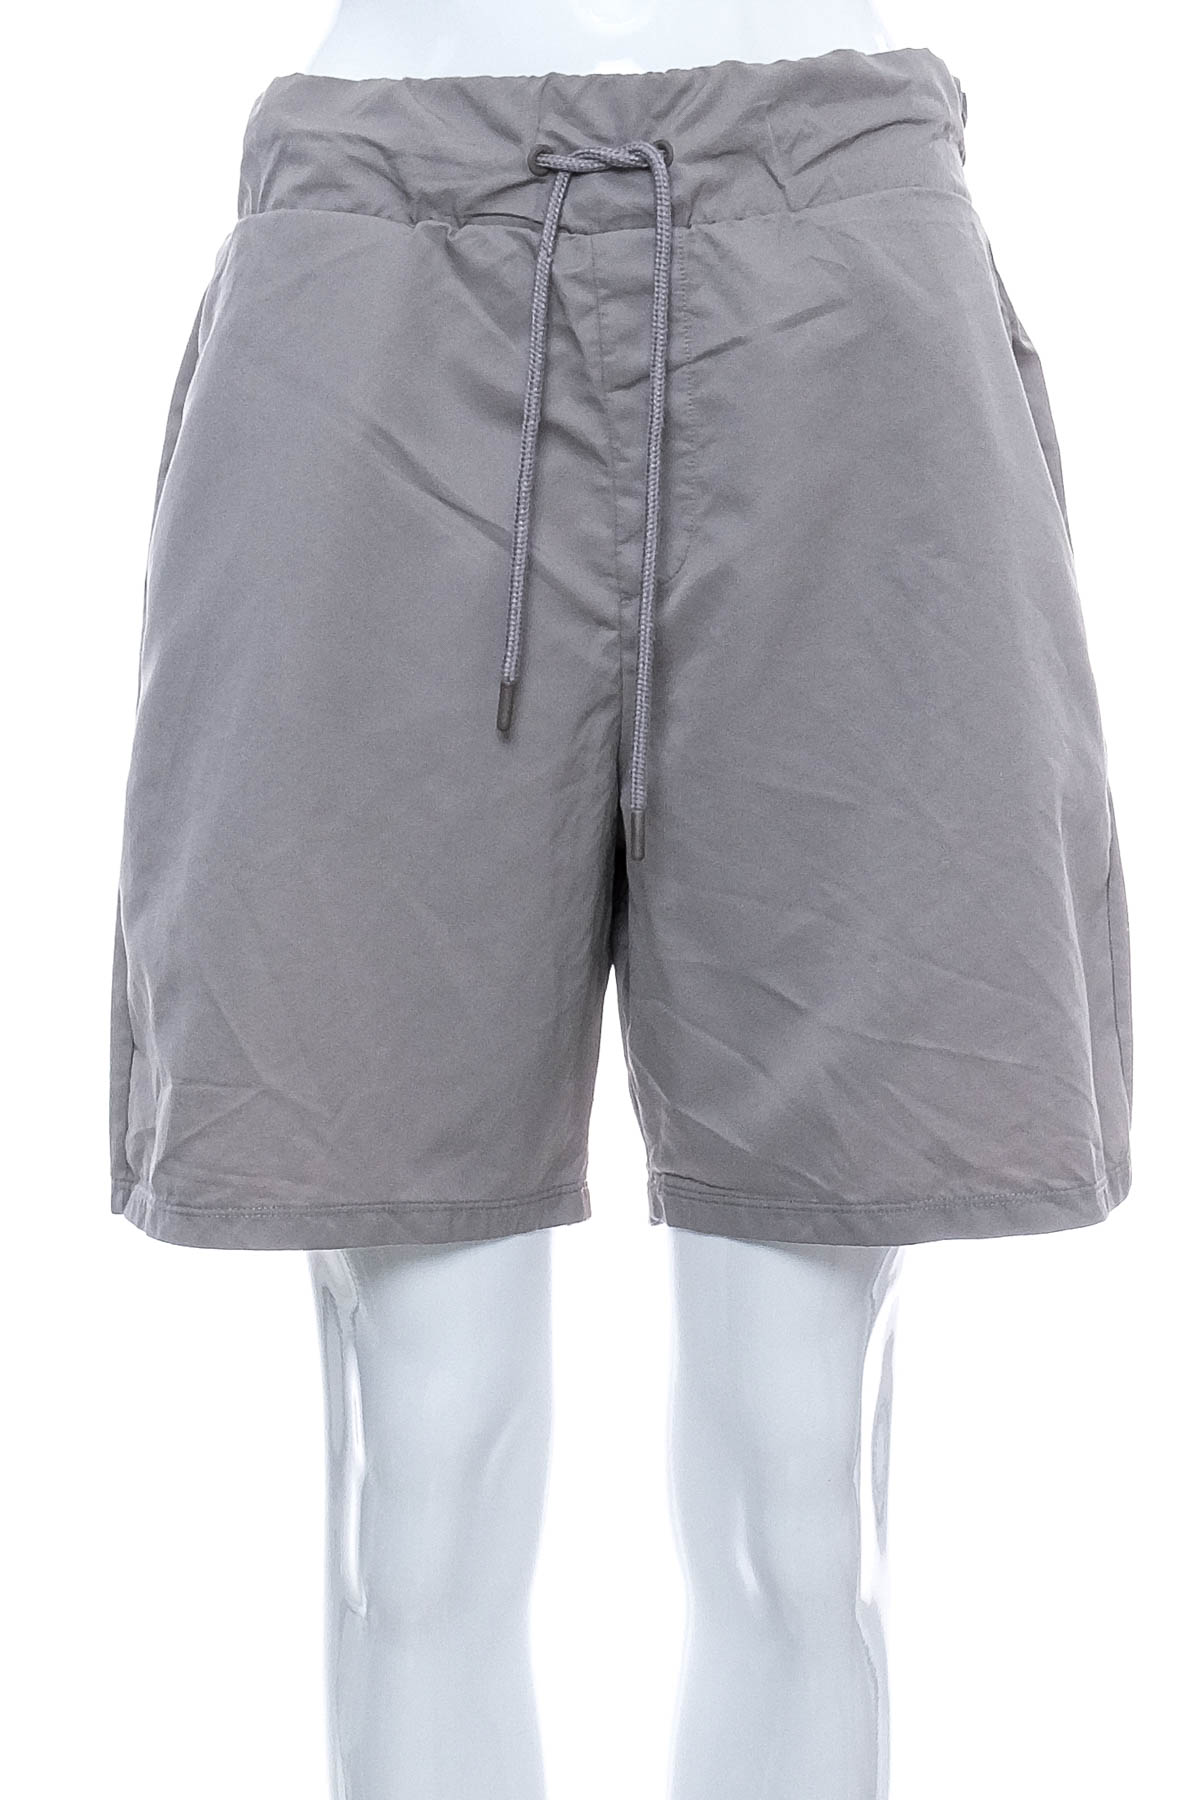 Women's shorts - Nu-in - 0